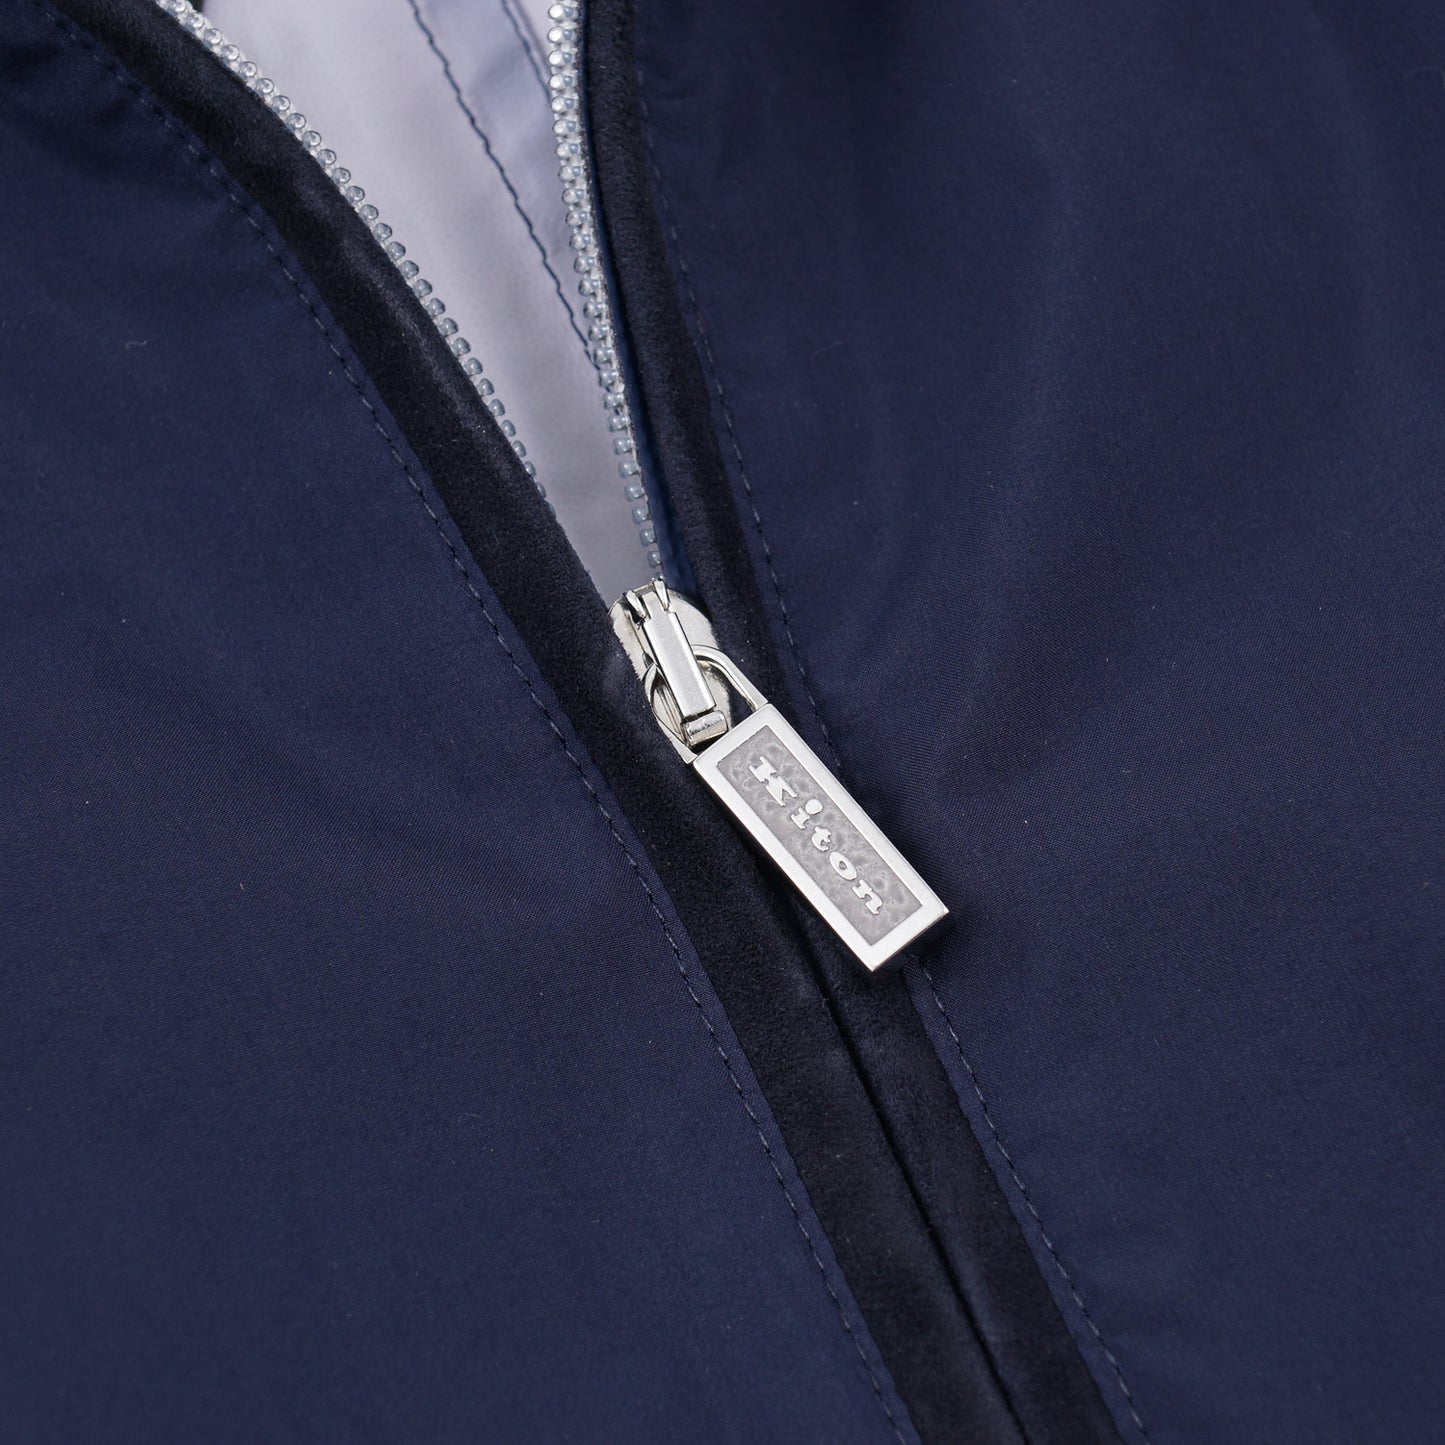 Kiton Lightweight Packable Hooded Jacket - Top Shelf Apparel